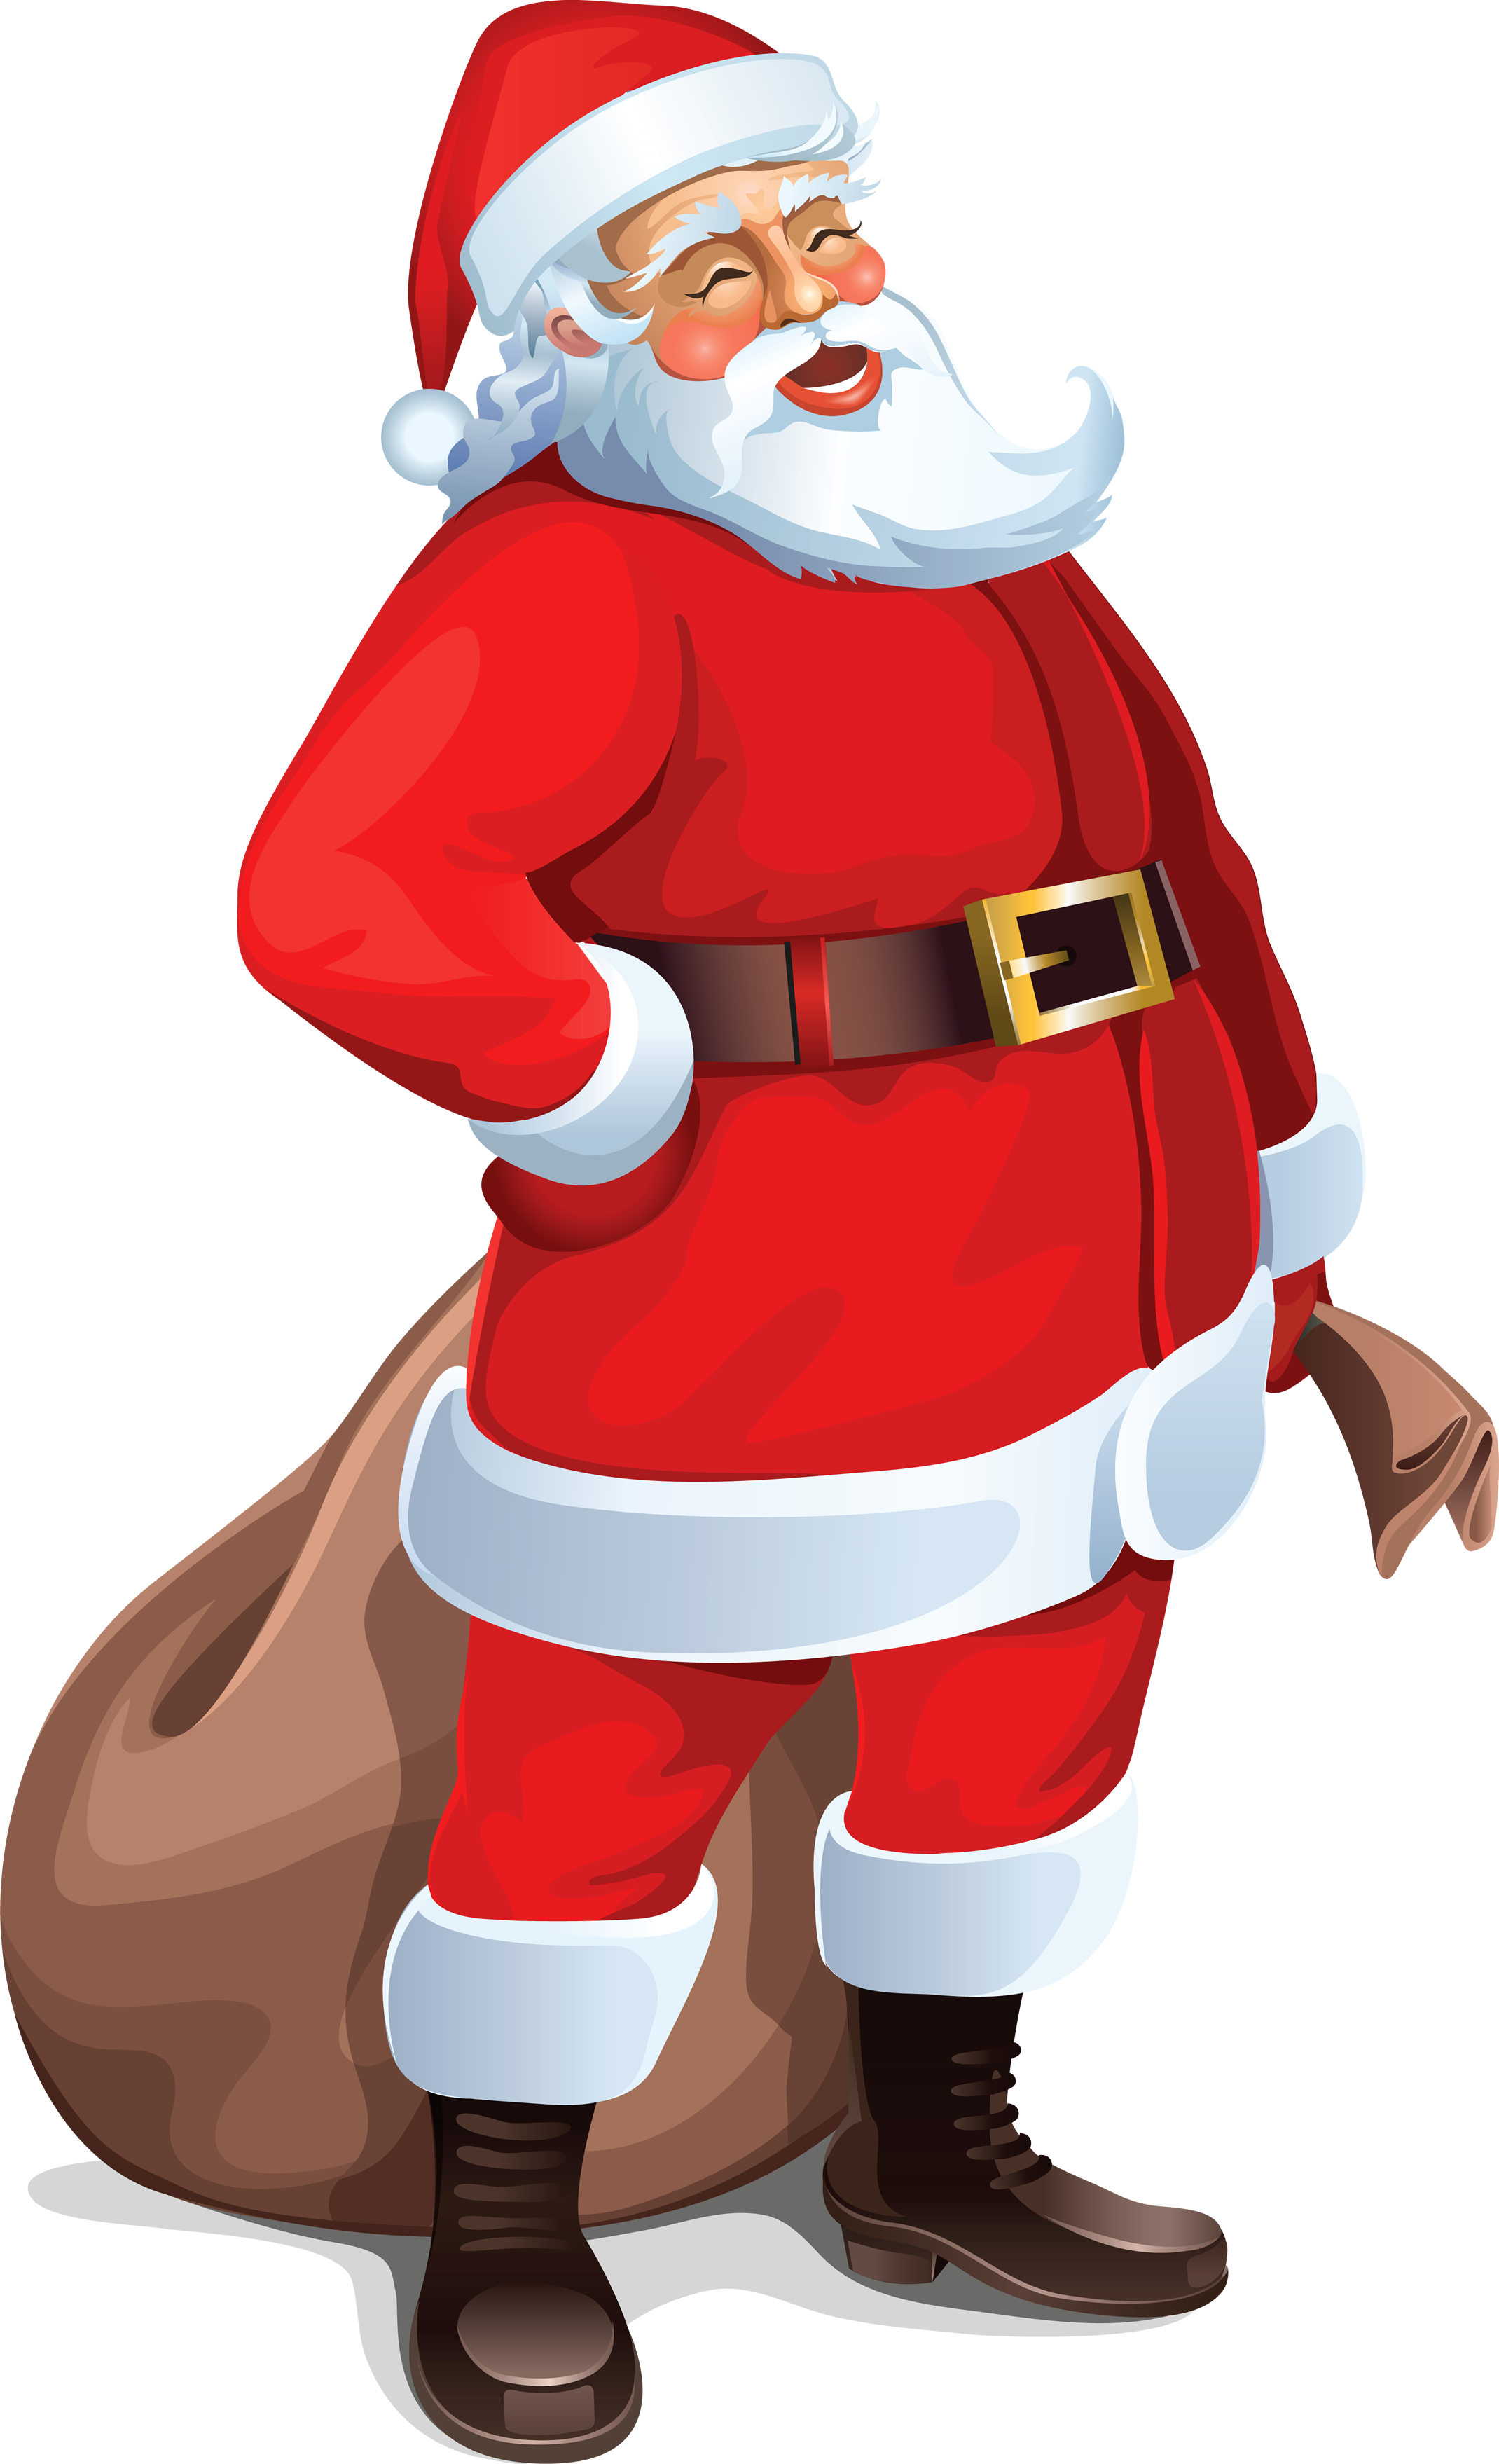 Santa Claus PNG images free download, Santa Claus PNG